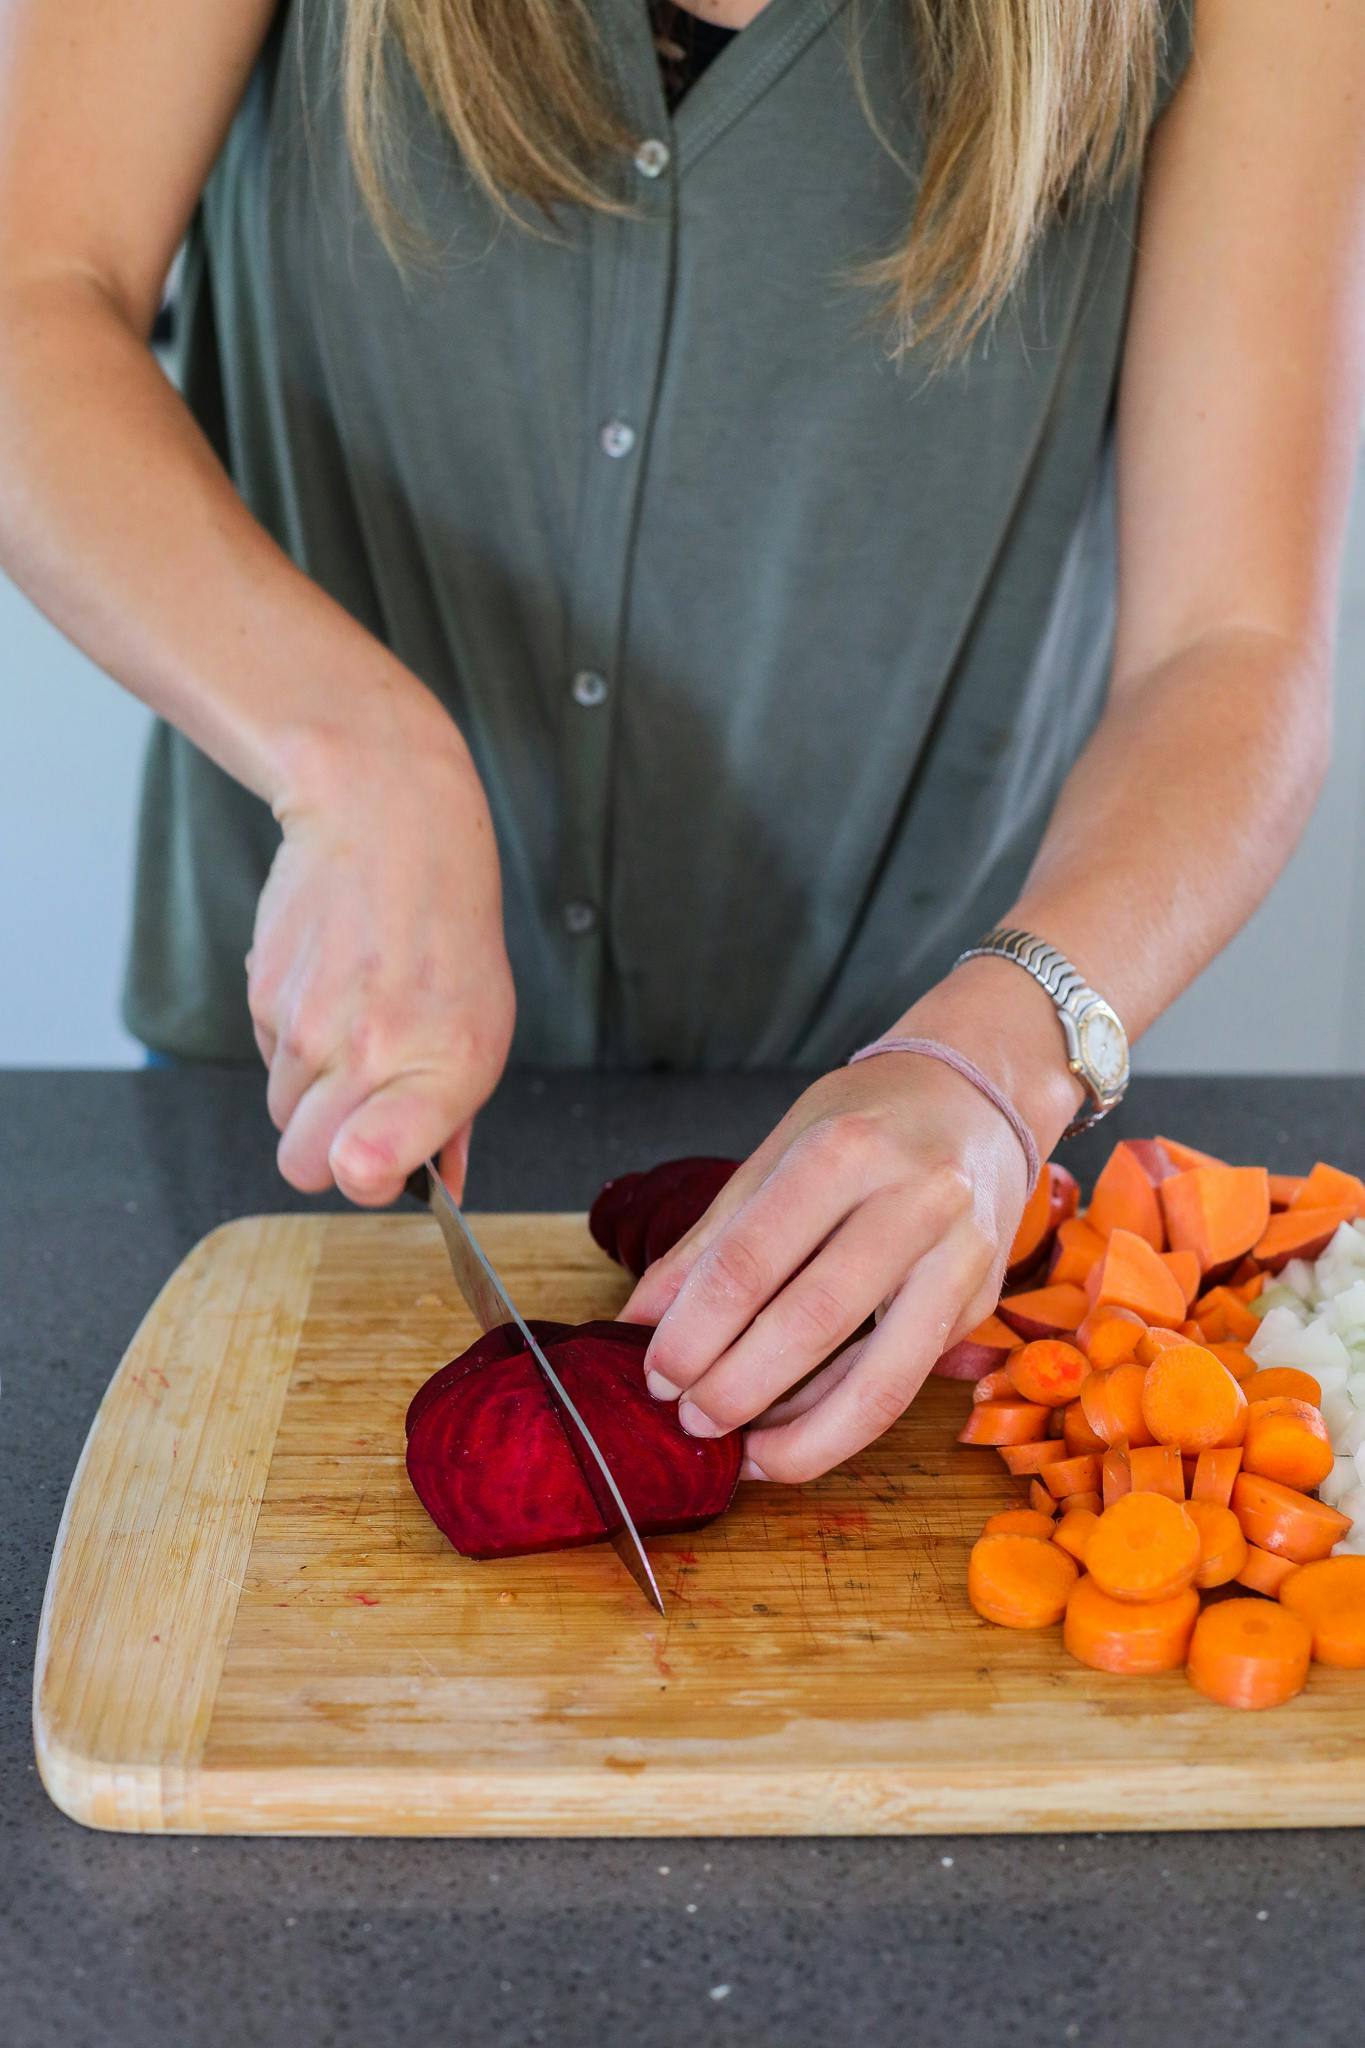 Woman cuts colorful, antioxidant rich veggies on a cutting board